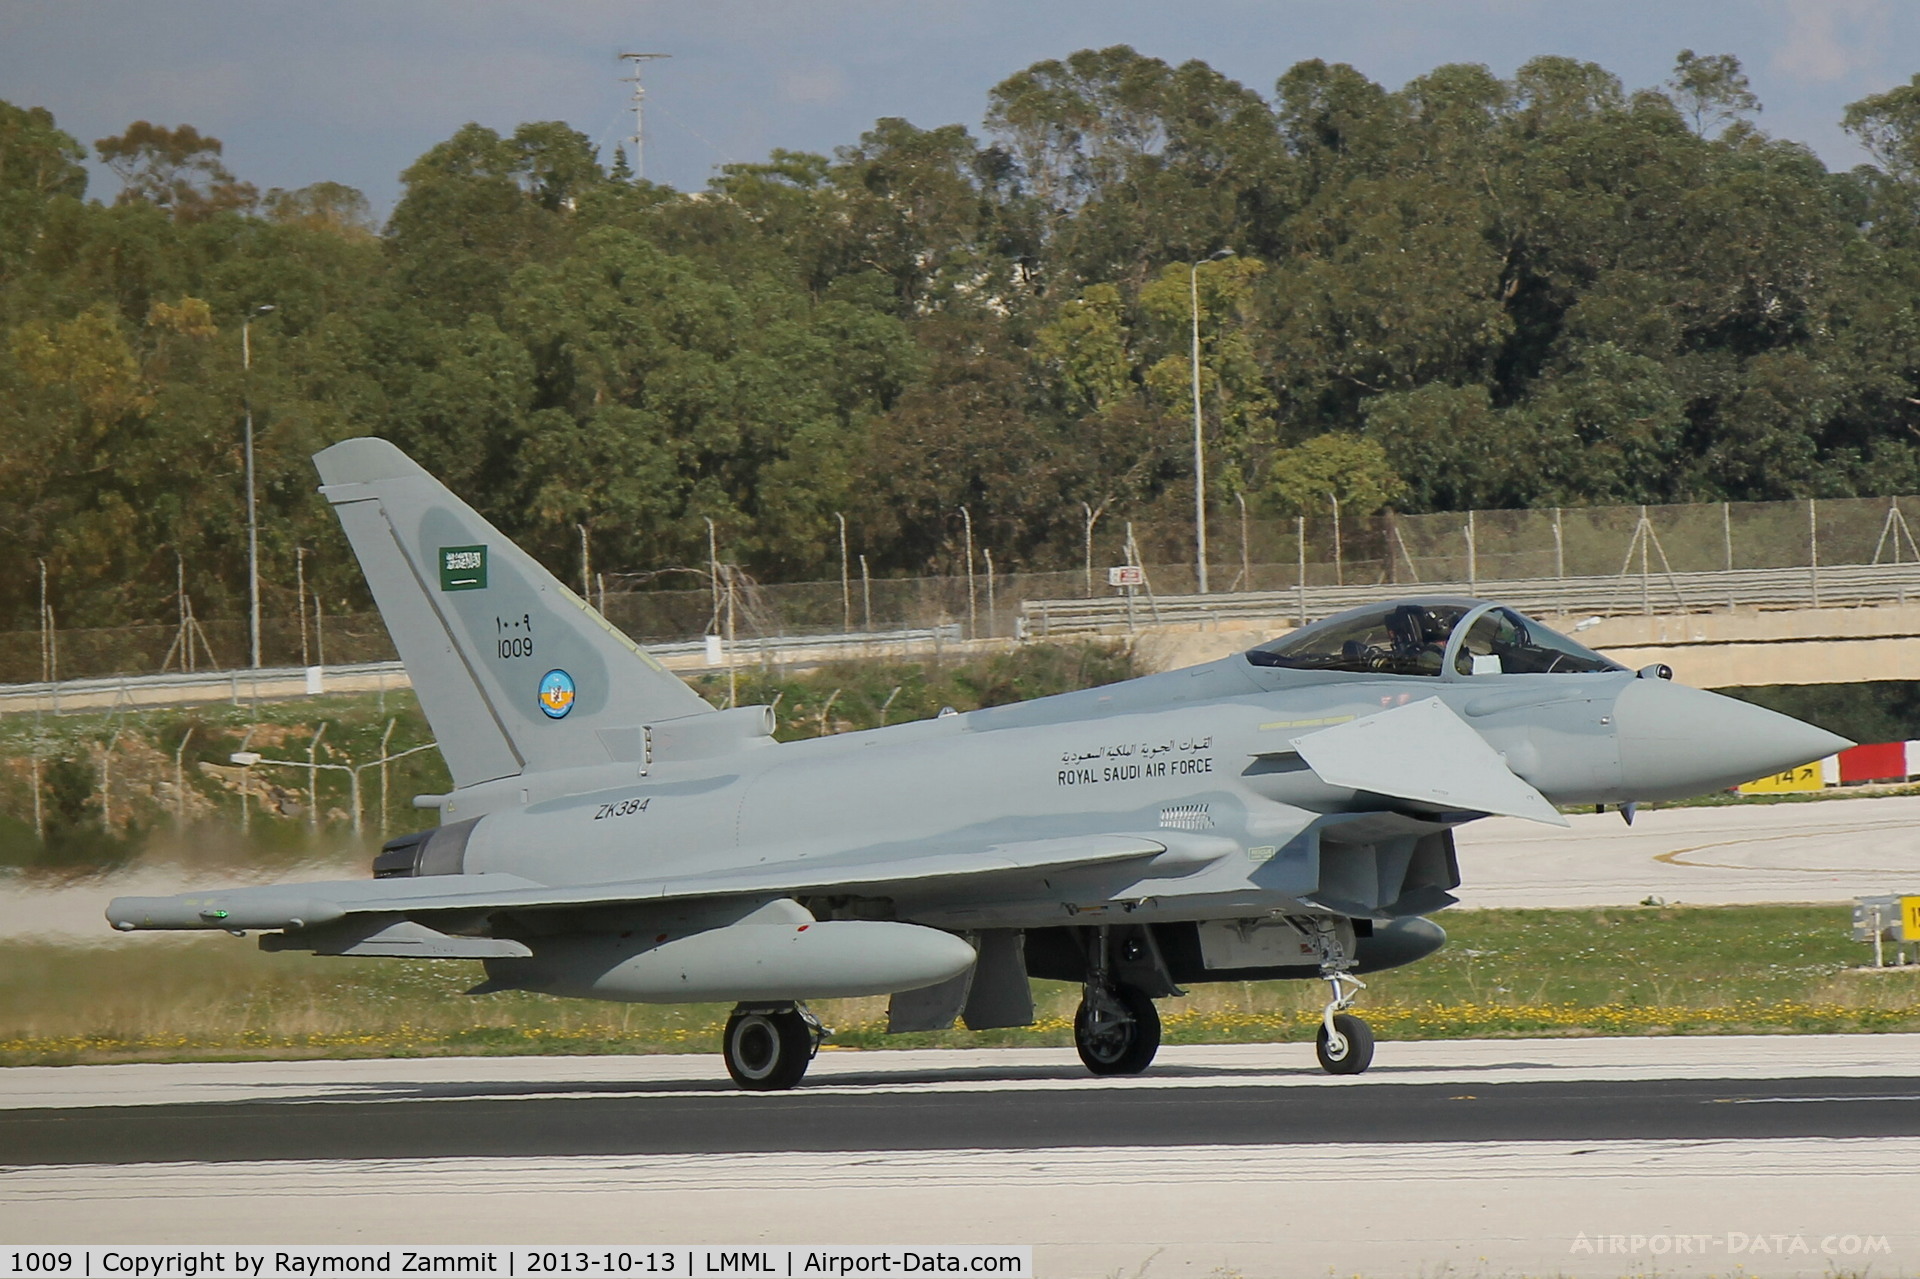 1009, 2013 Eurofighter EF-2000 Typhoon F2 C/N 362/CS021, Eurofighter Typhoon T3 ZK384 (1009)
Royal Saudi Air Force